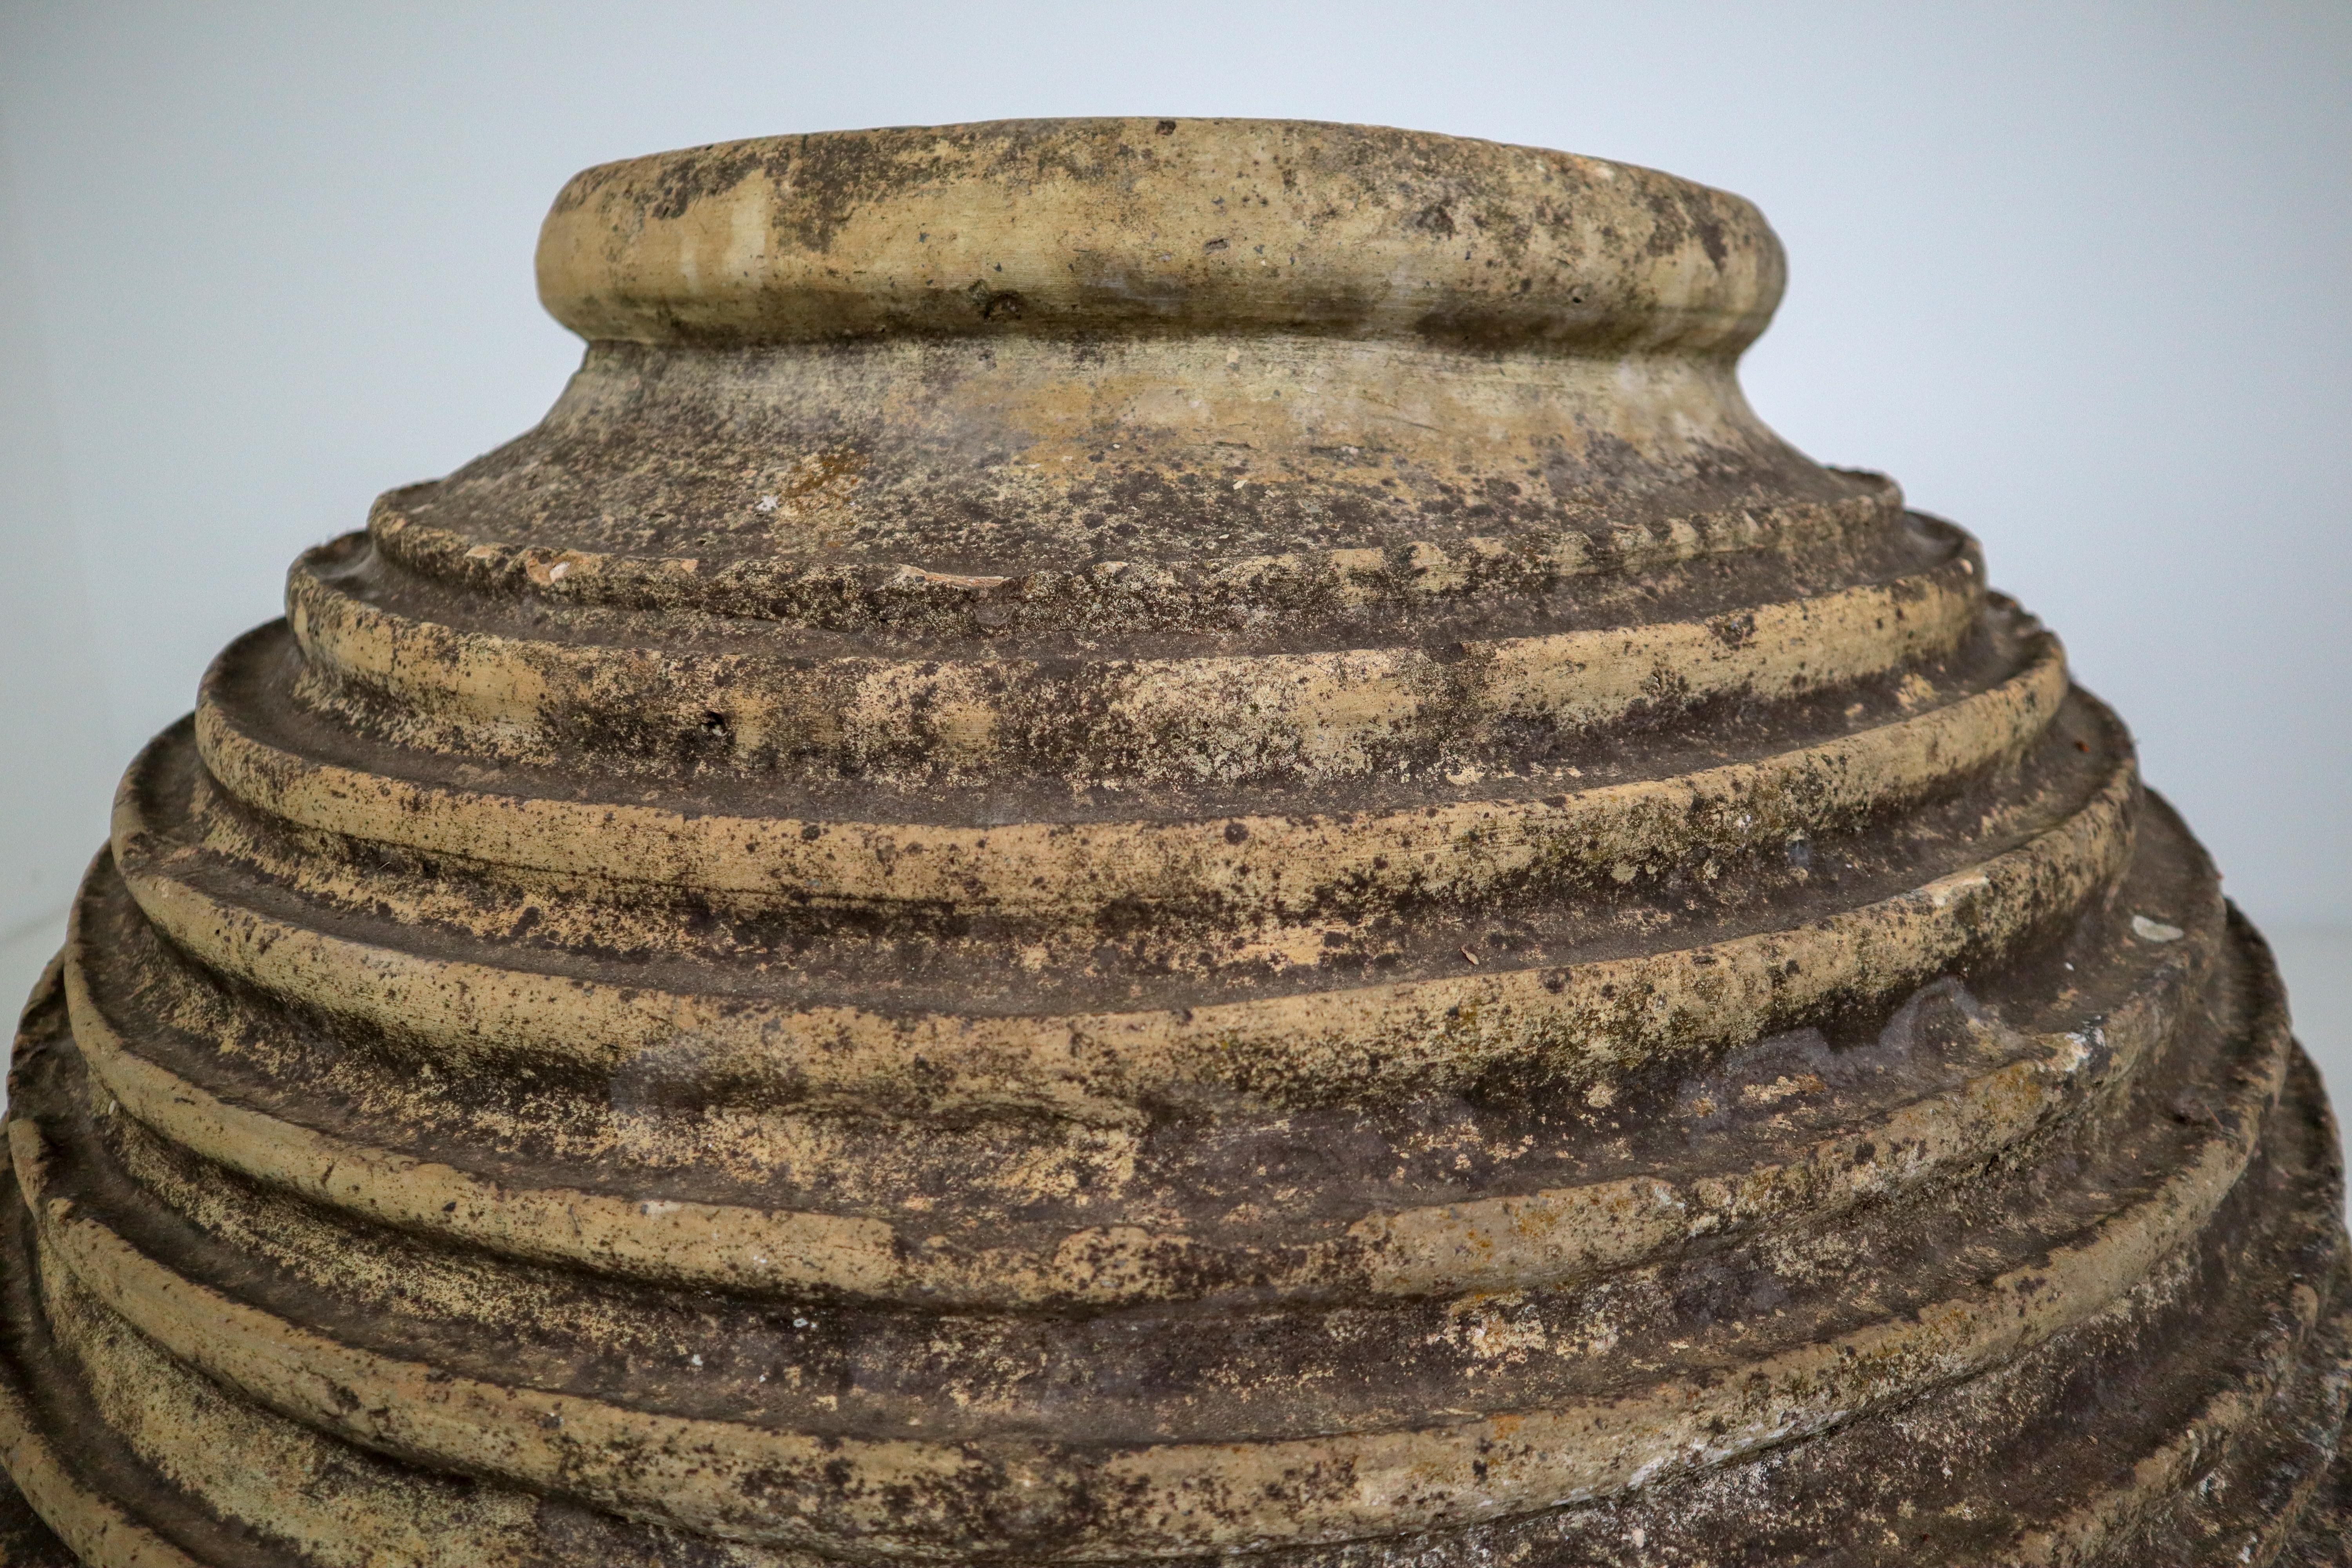 Peloponnesian Koroni jar naturally weathered into a beautiful dark patina with lichen. Typical 